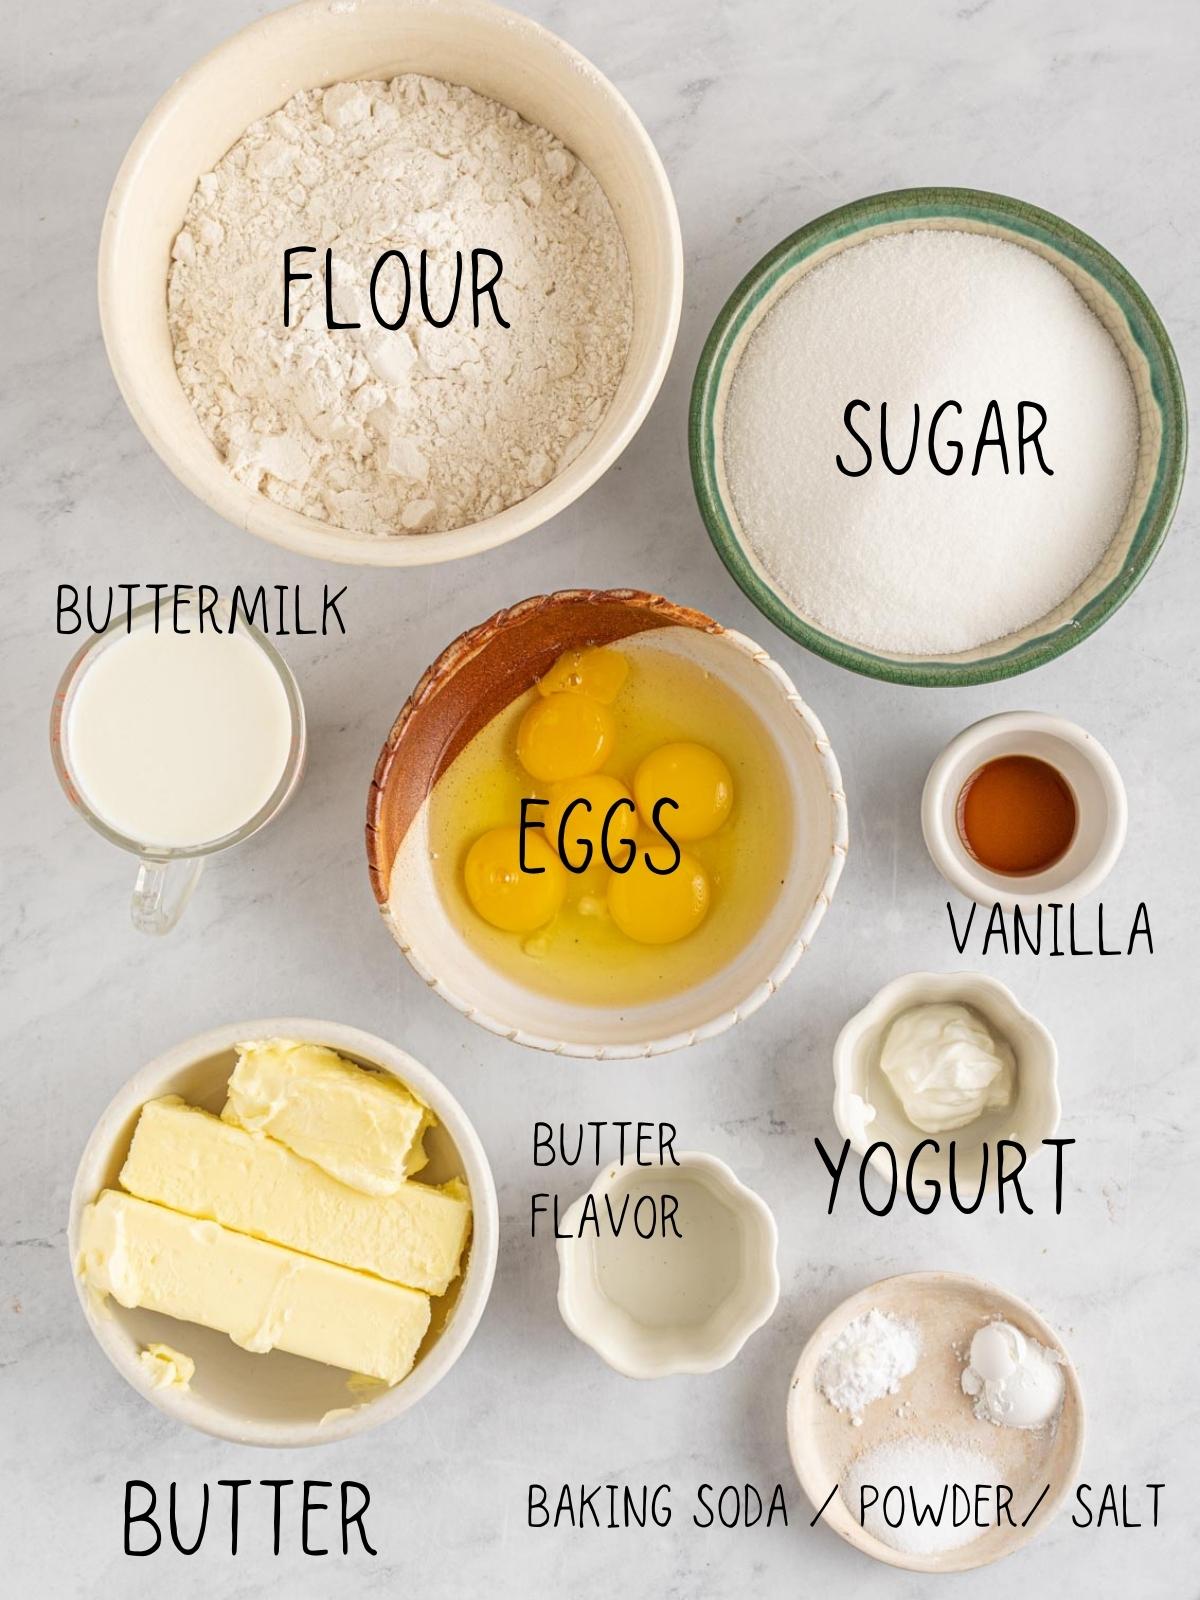 ingredients for Kentucky butter cake including sugar, eggs, vanilla, flour, yogurt, buttermilk, baking soda